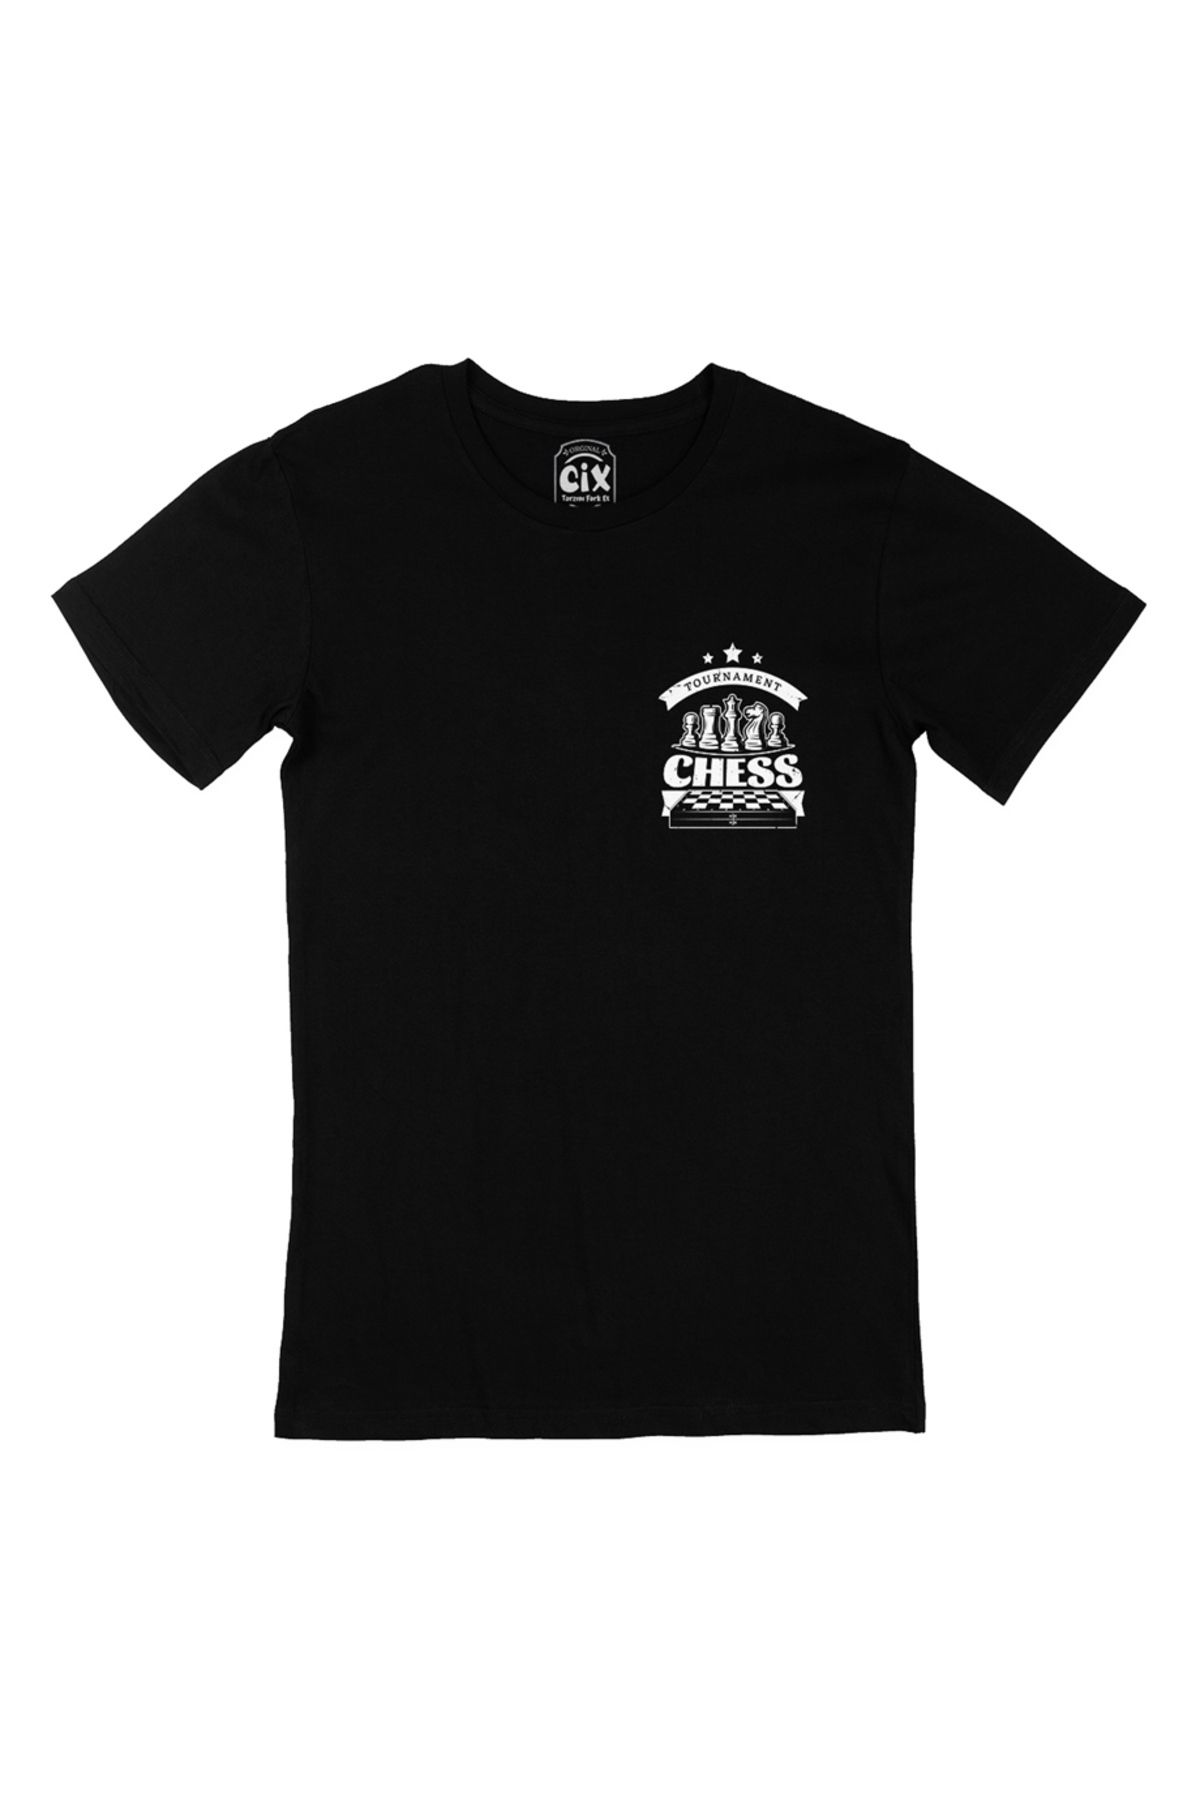 Cix Satranç Turnuvası Cep Logo Tasarımlı Siyah Tişört